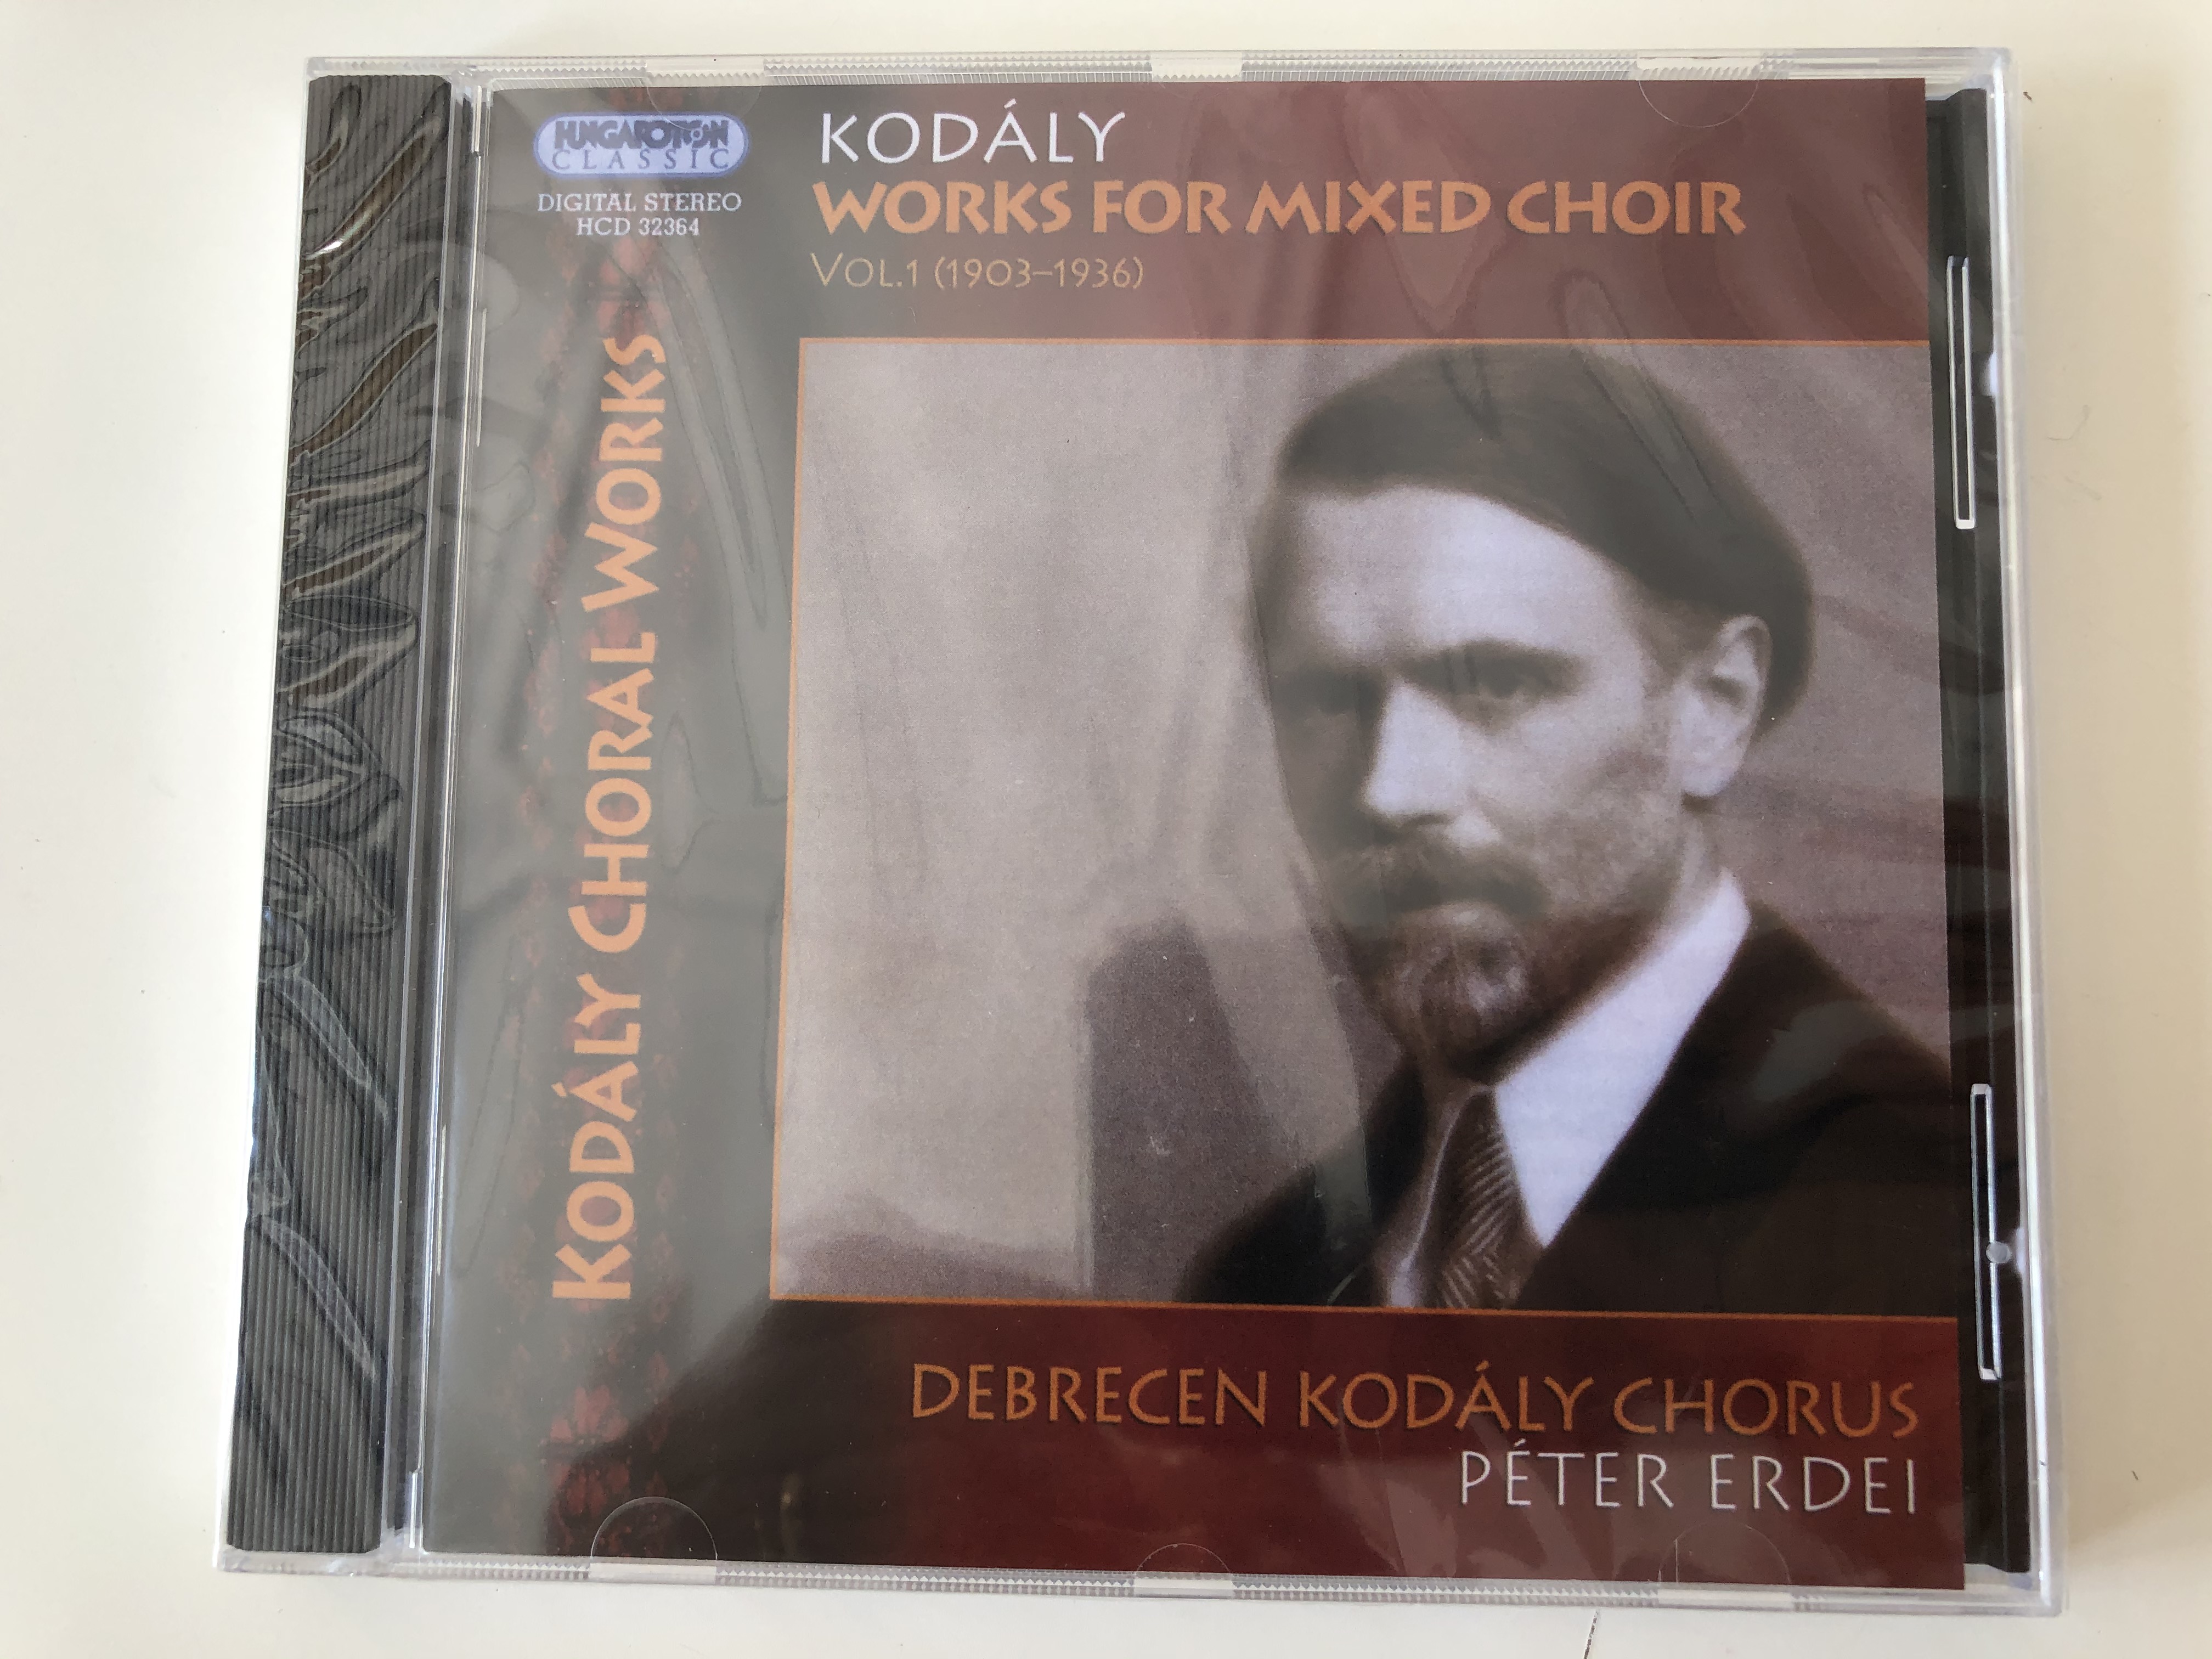 kodaly-works-for-mixed-choir-vol.-1-1903-1936-kodaly-choral-works-debecen-kodaly-chorus-peter-erdei-hungaroton-classic-audio-cd-2005-stereo-hcd-32364-1-.jpg